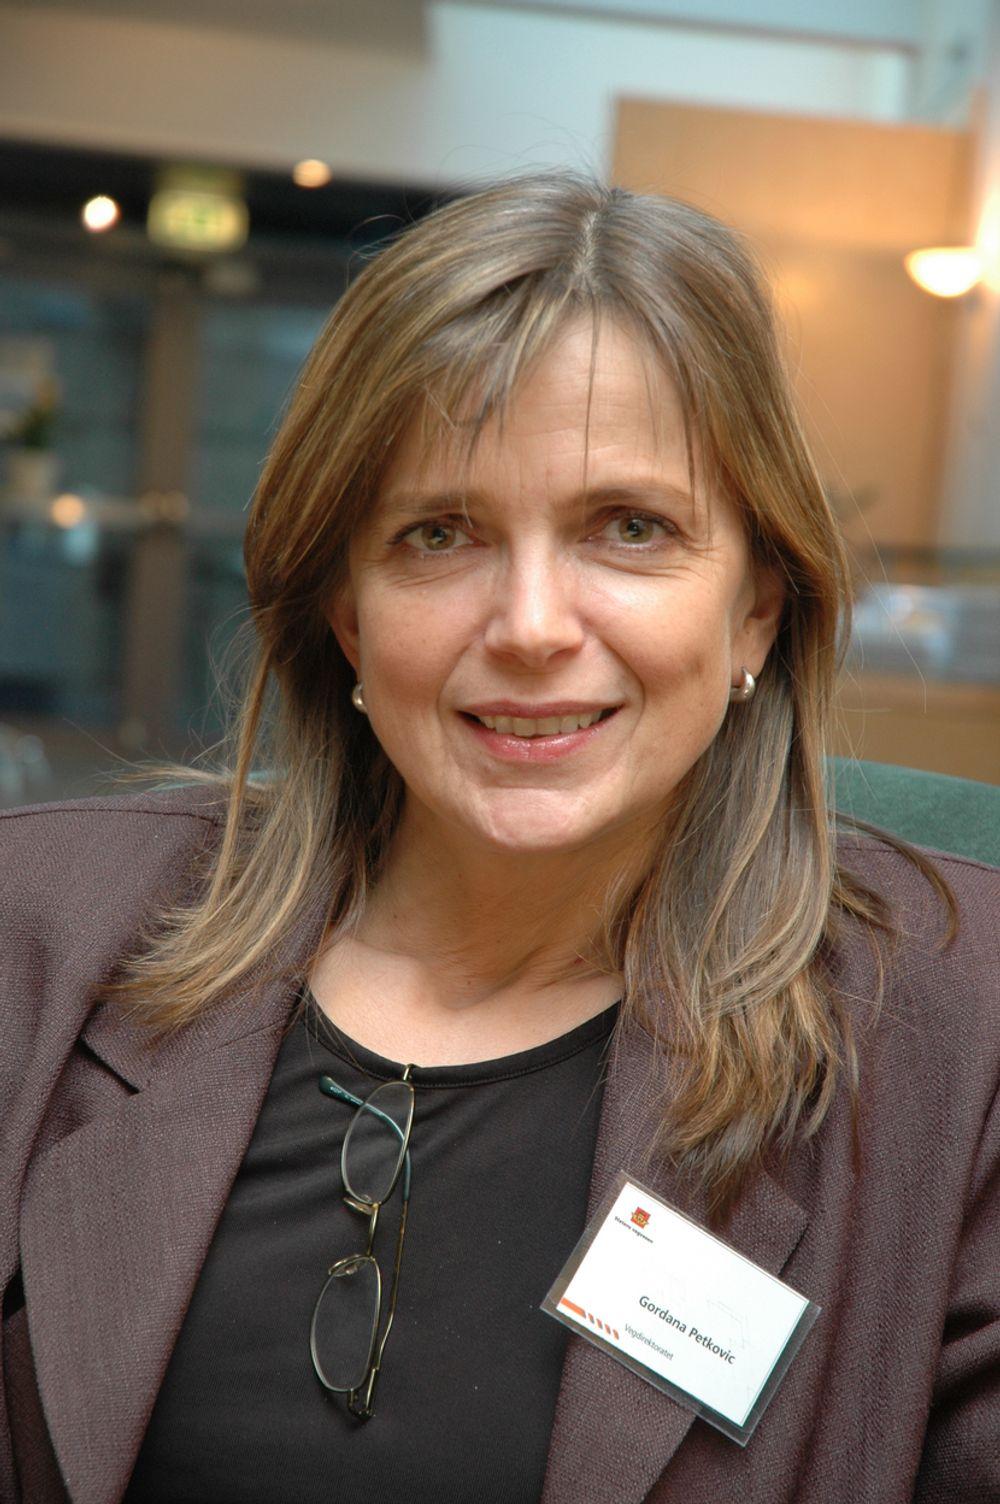 Senioringeniør Gordana Petkovic, Vegdirektoratet. Ansvarlig for prosjektet Klima og transport